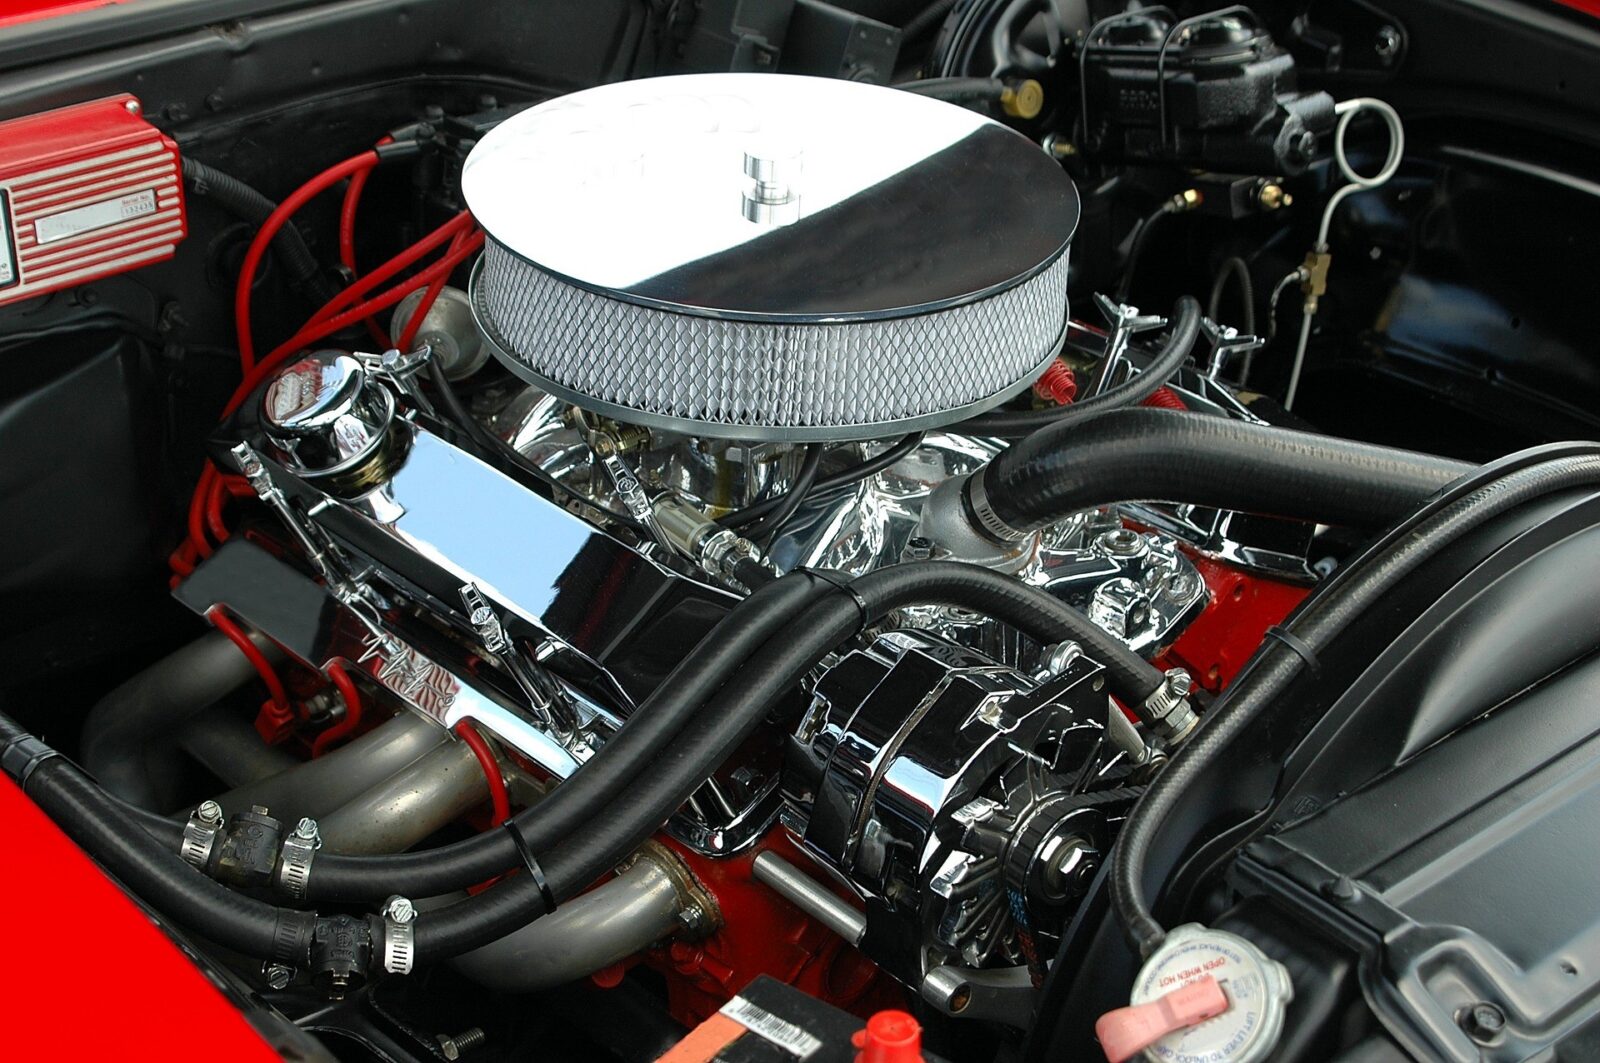 Insides of a car engine